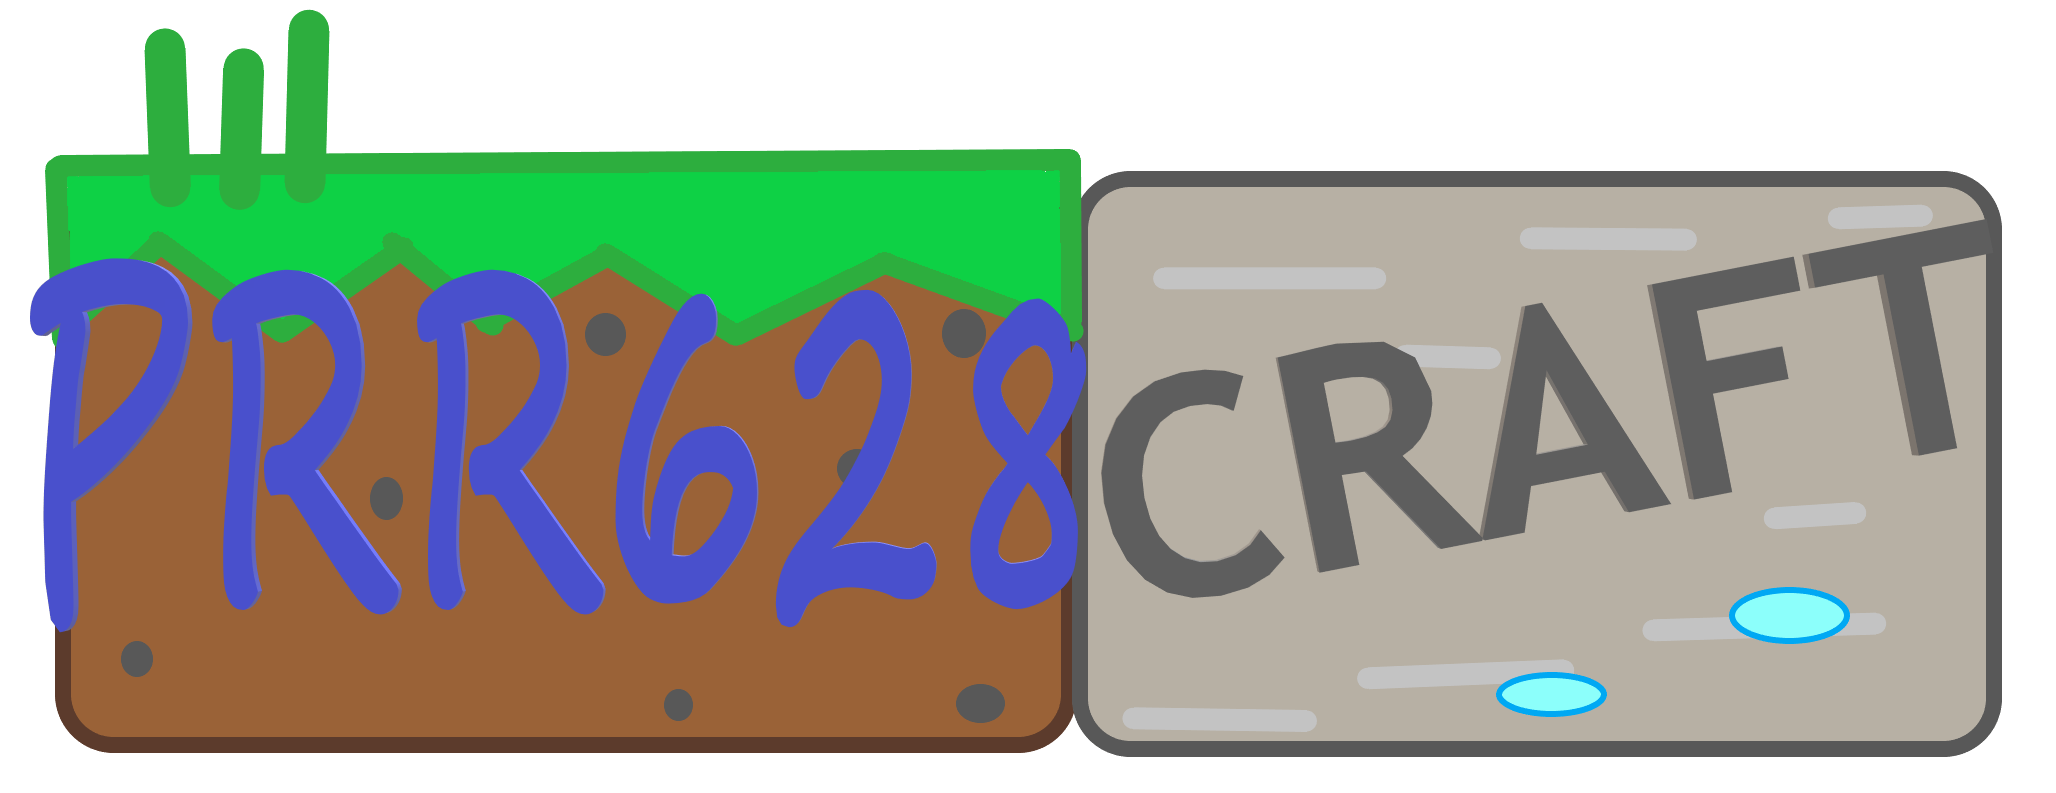 PRR628CRAFT Logo